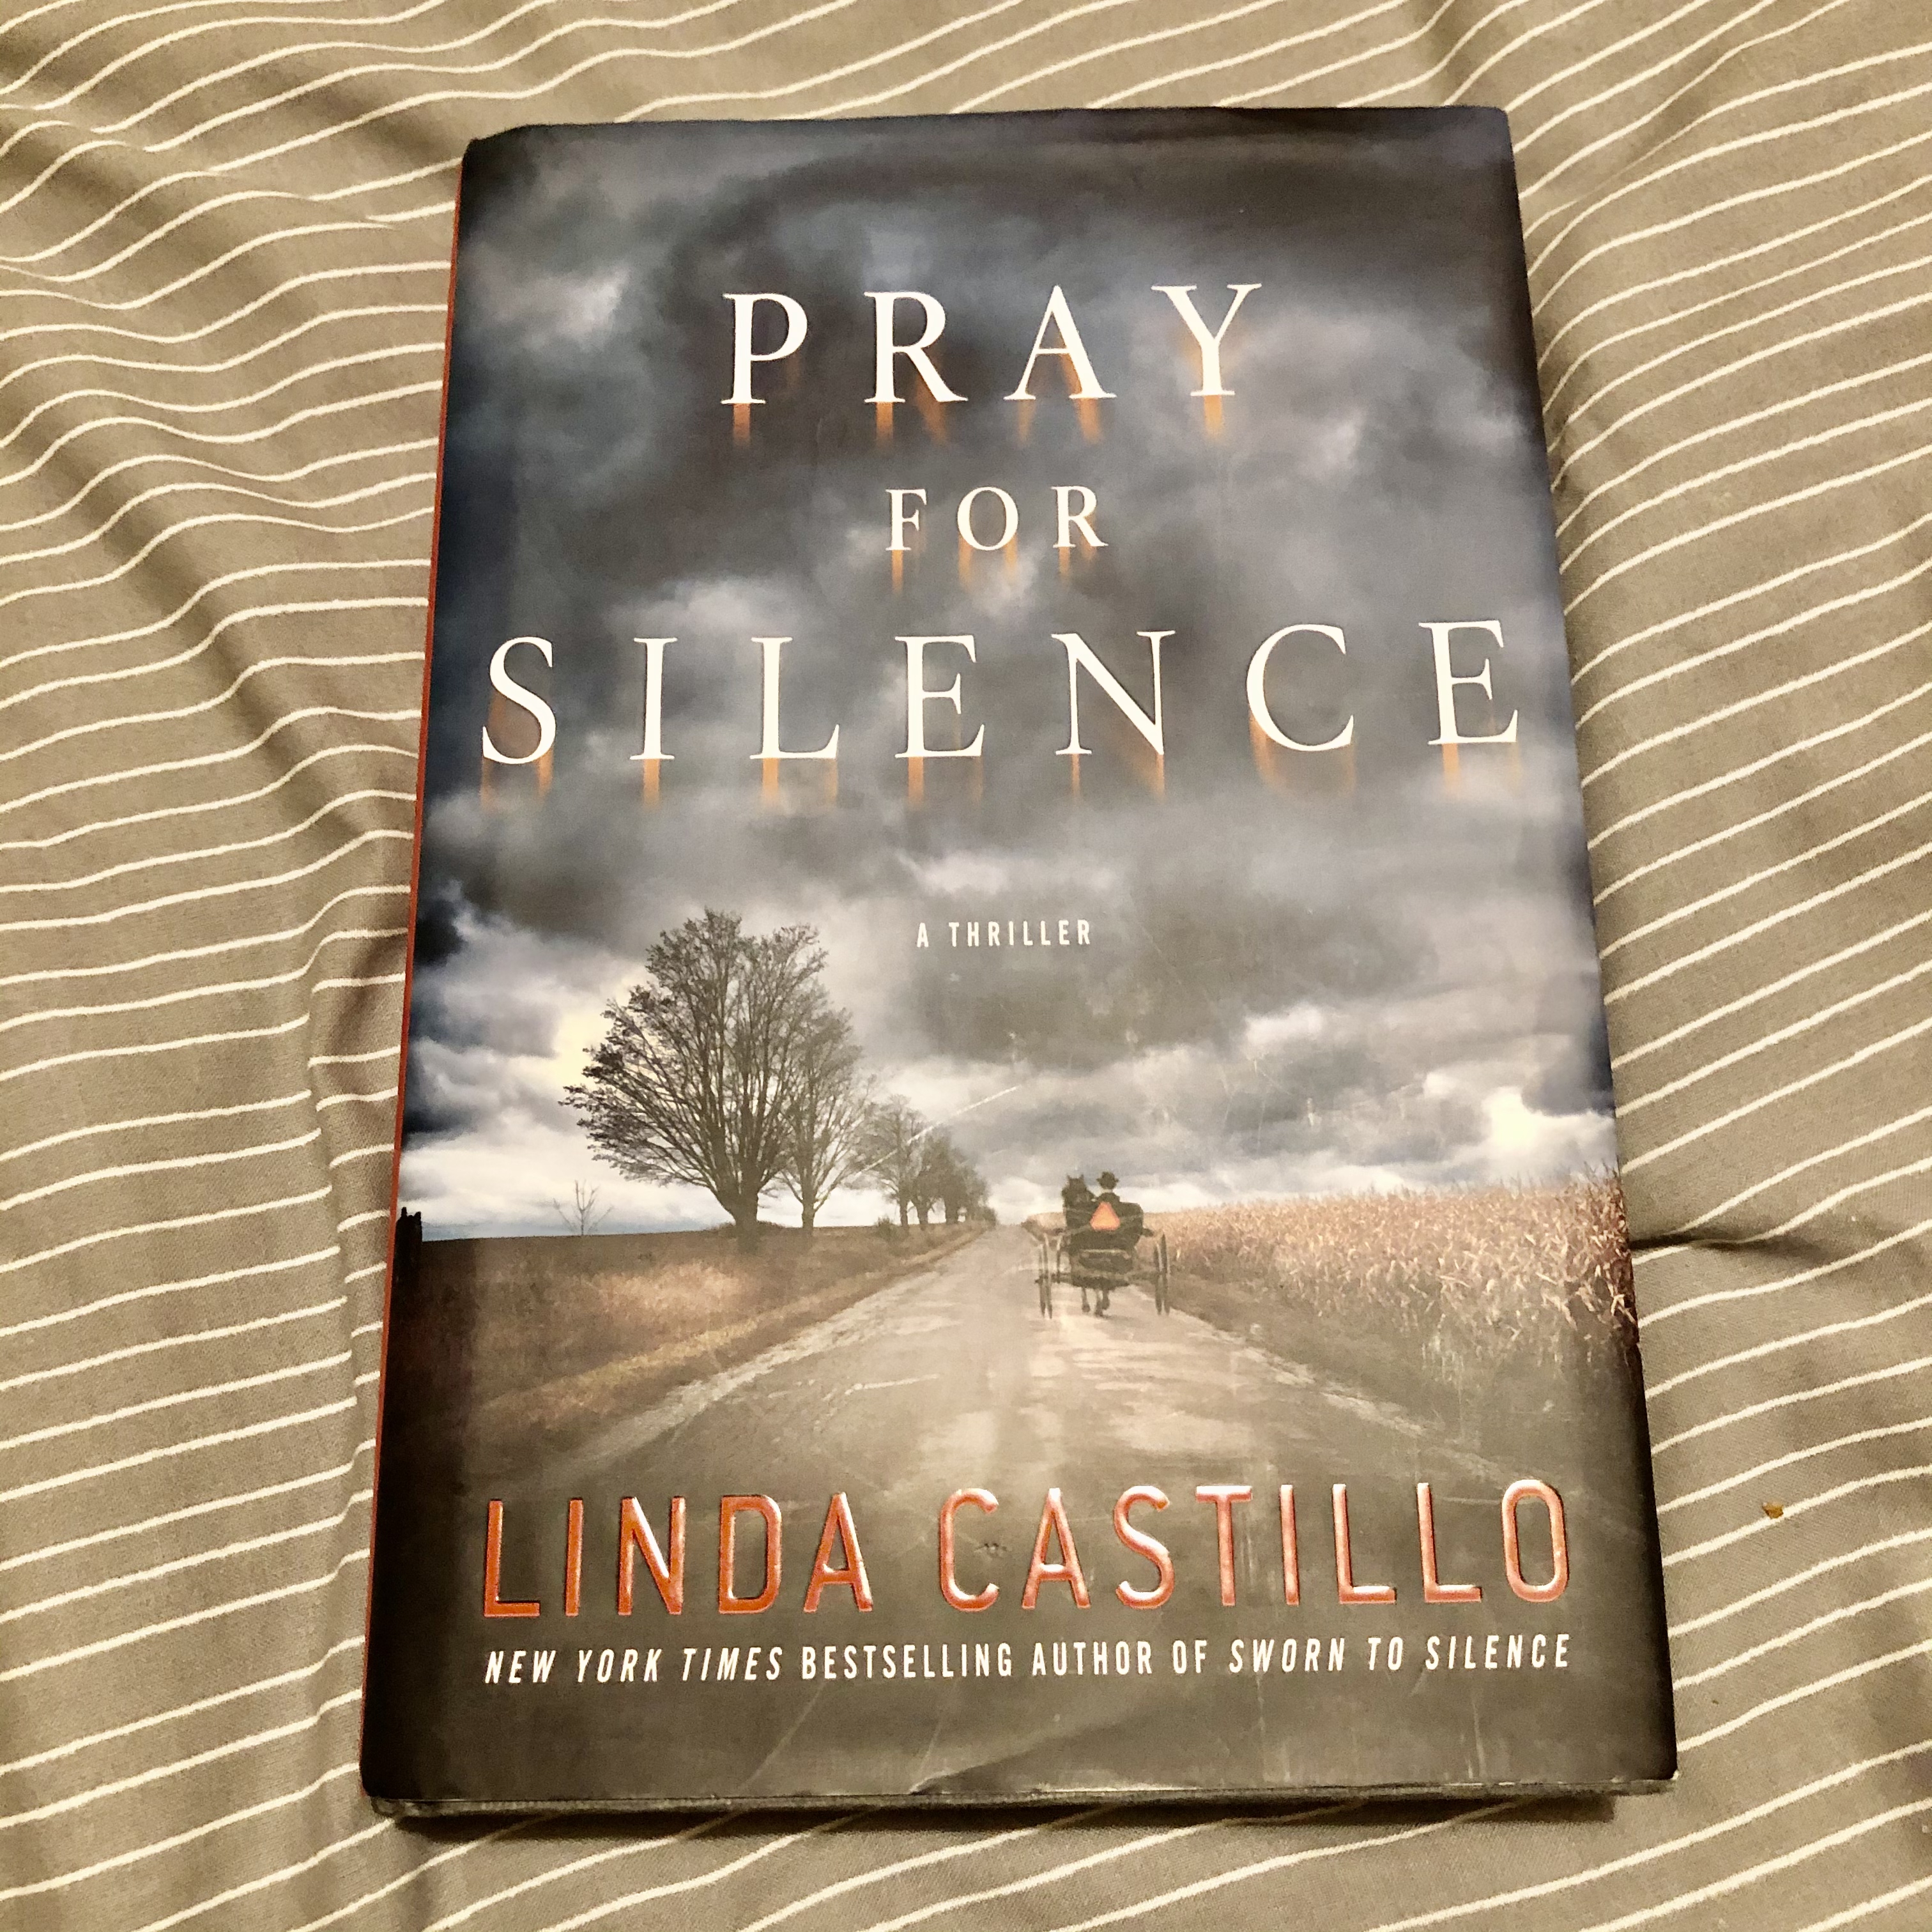 Pray for Silence by Linda Castillo